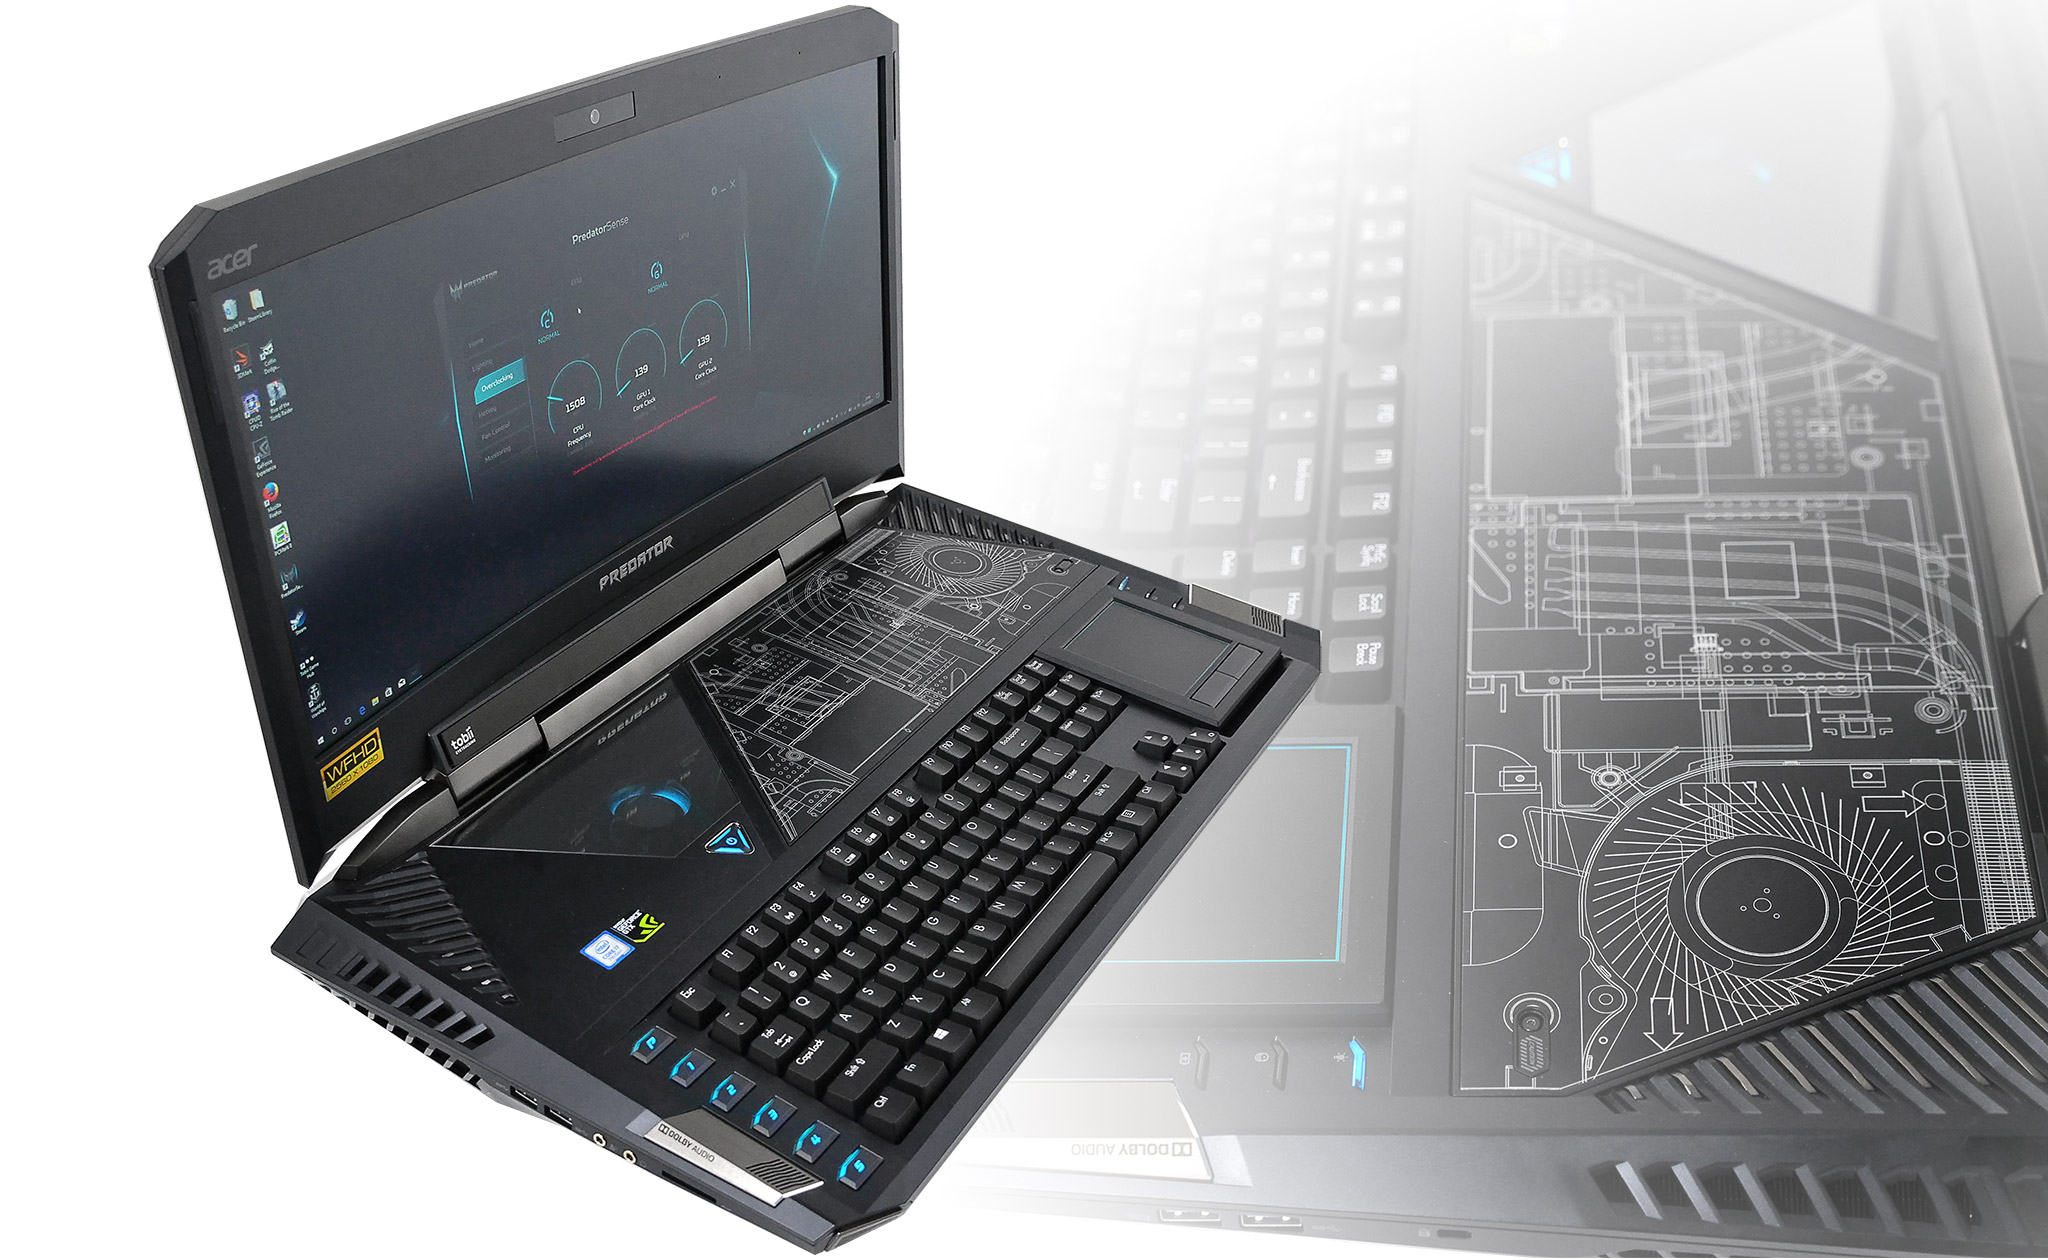 Acer Predator 21 X Laptop (21-inch GTX 1080 SLI) | KitGuru